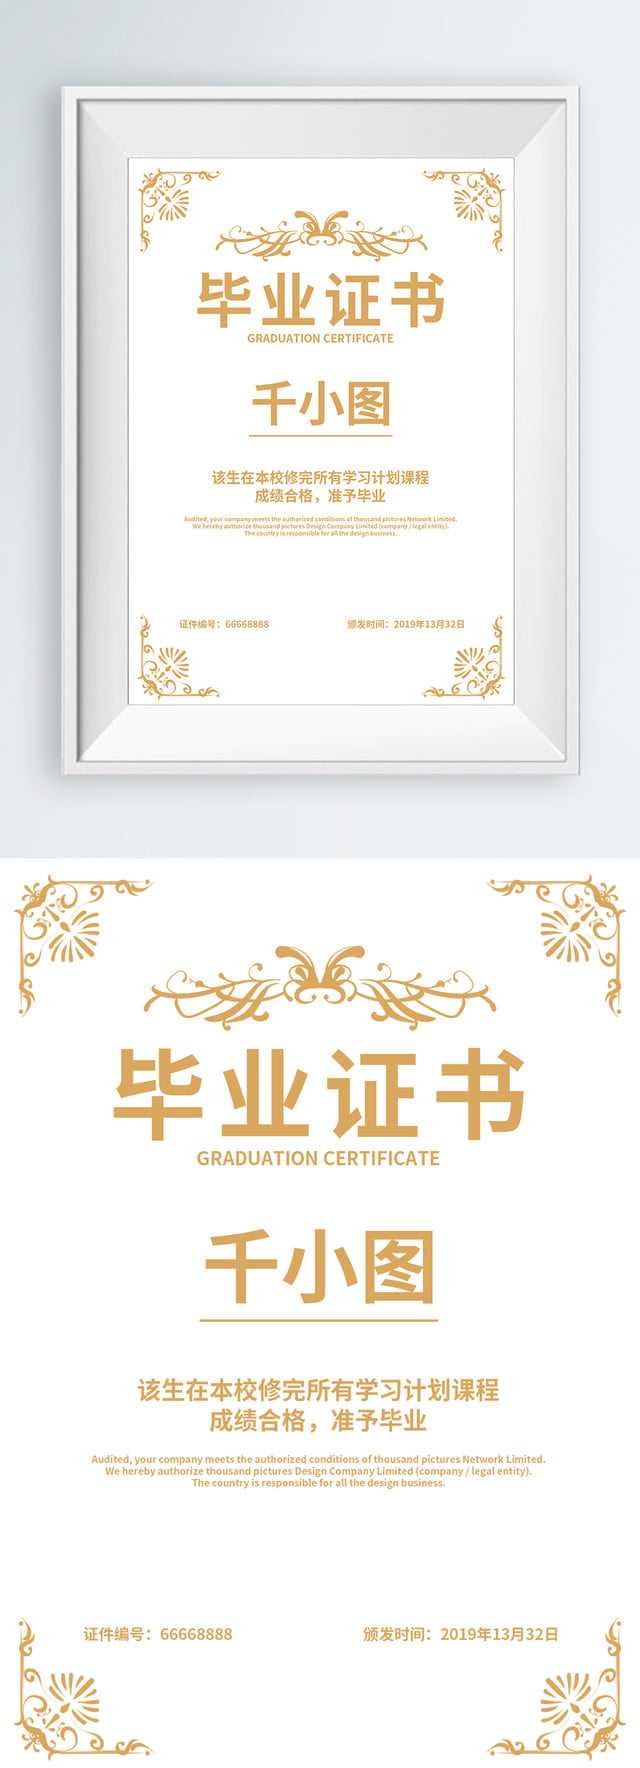 University Graduation Certificate Pictures Free Download With University Graduation Certificate Template